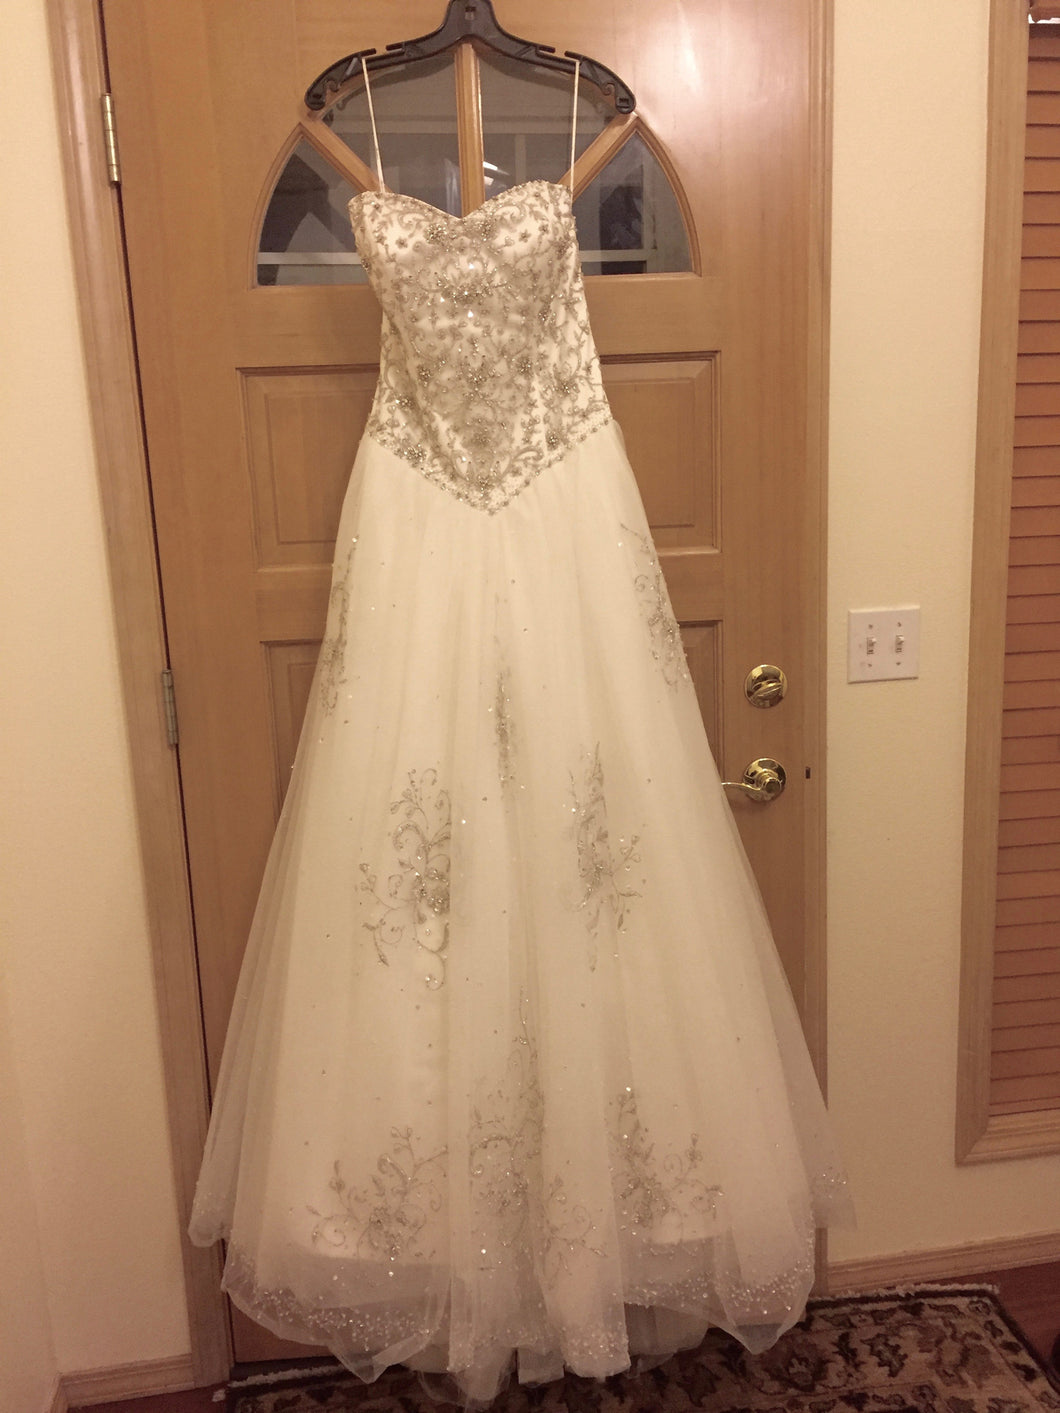 Jorge Perez de la Habana 'Glitz & Glam' size 6 new wedding dress front view on hanger